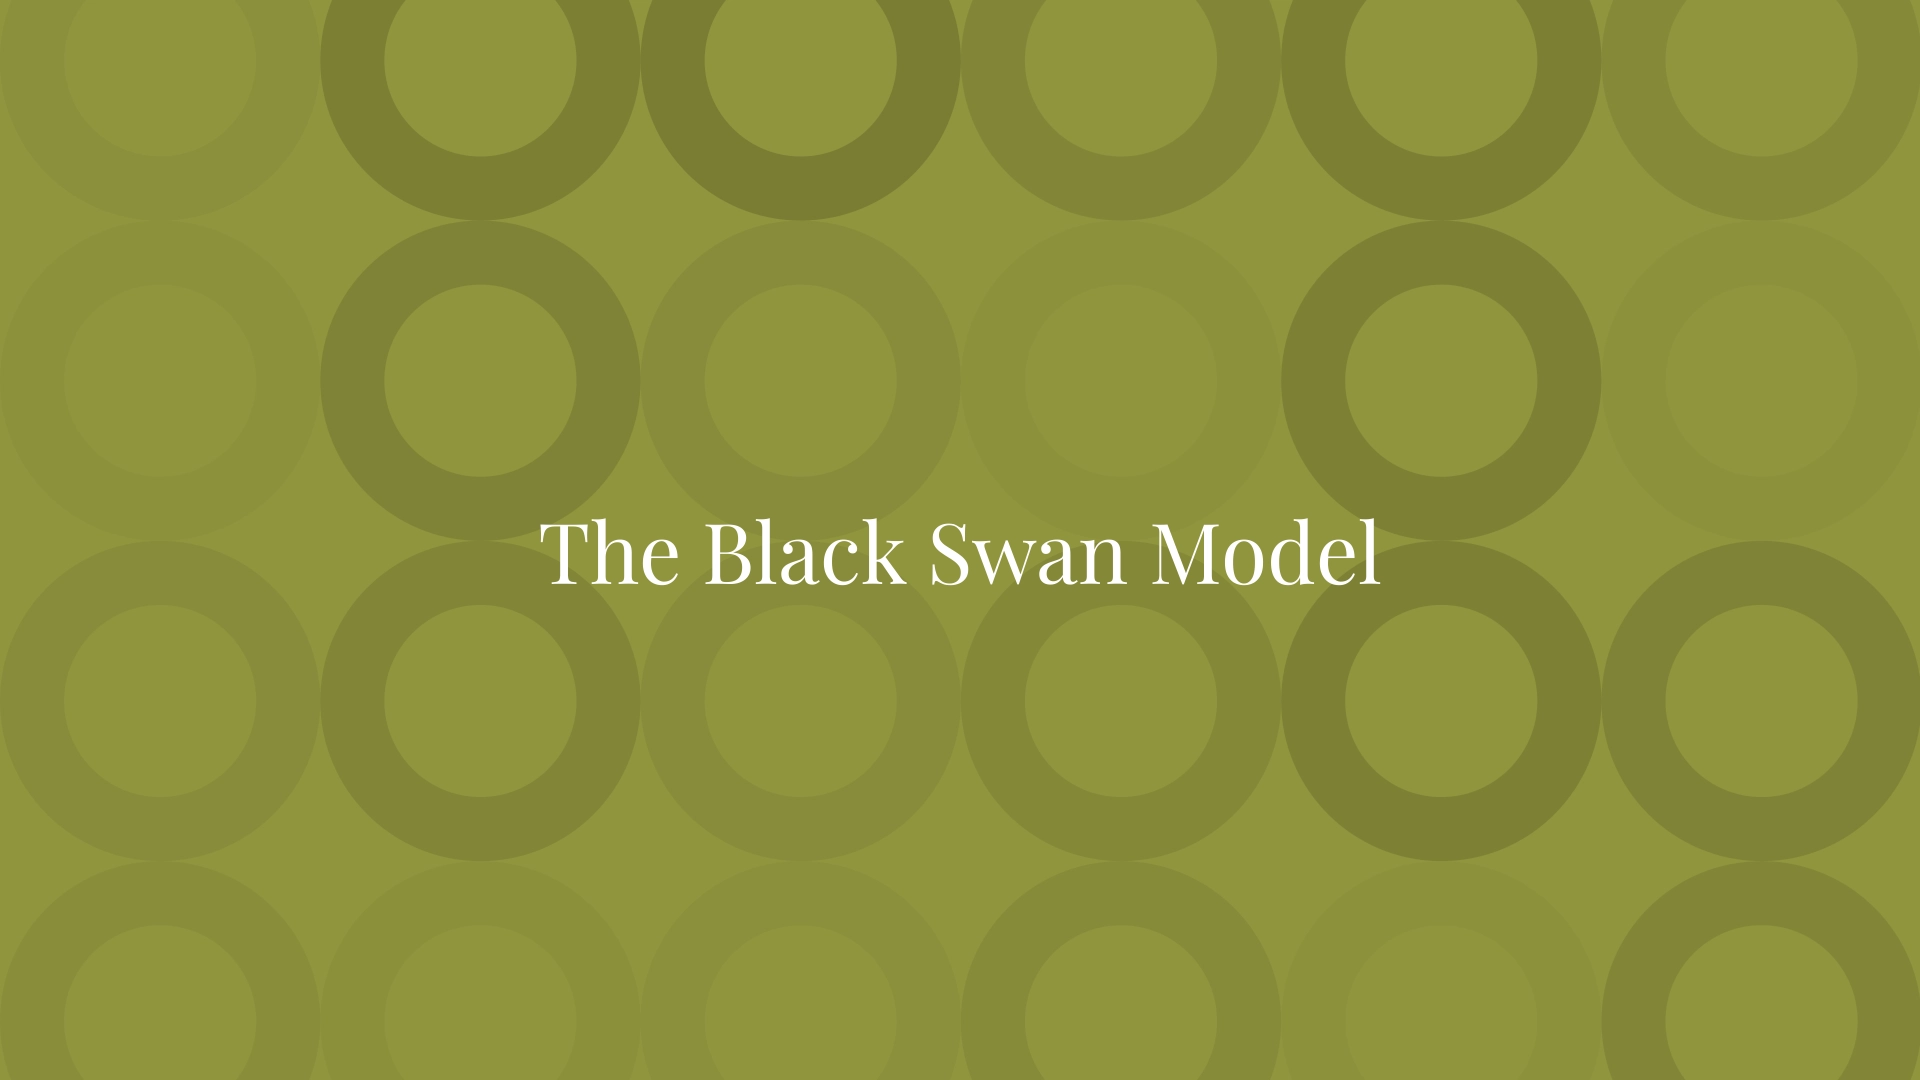 El modelo del cisne negro